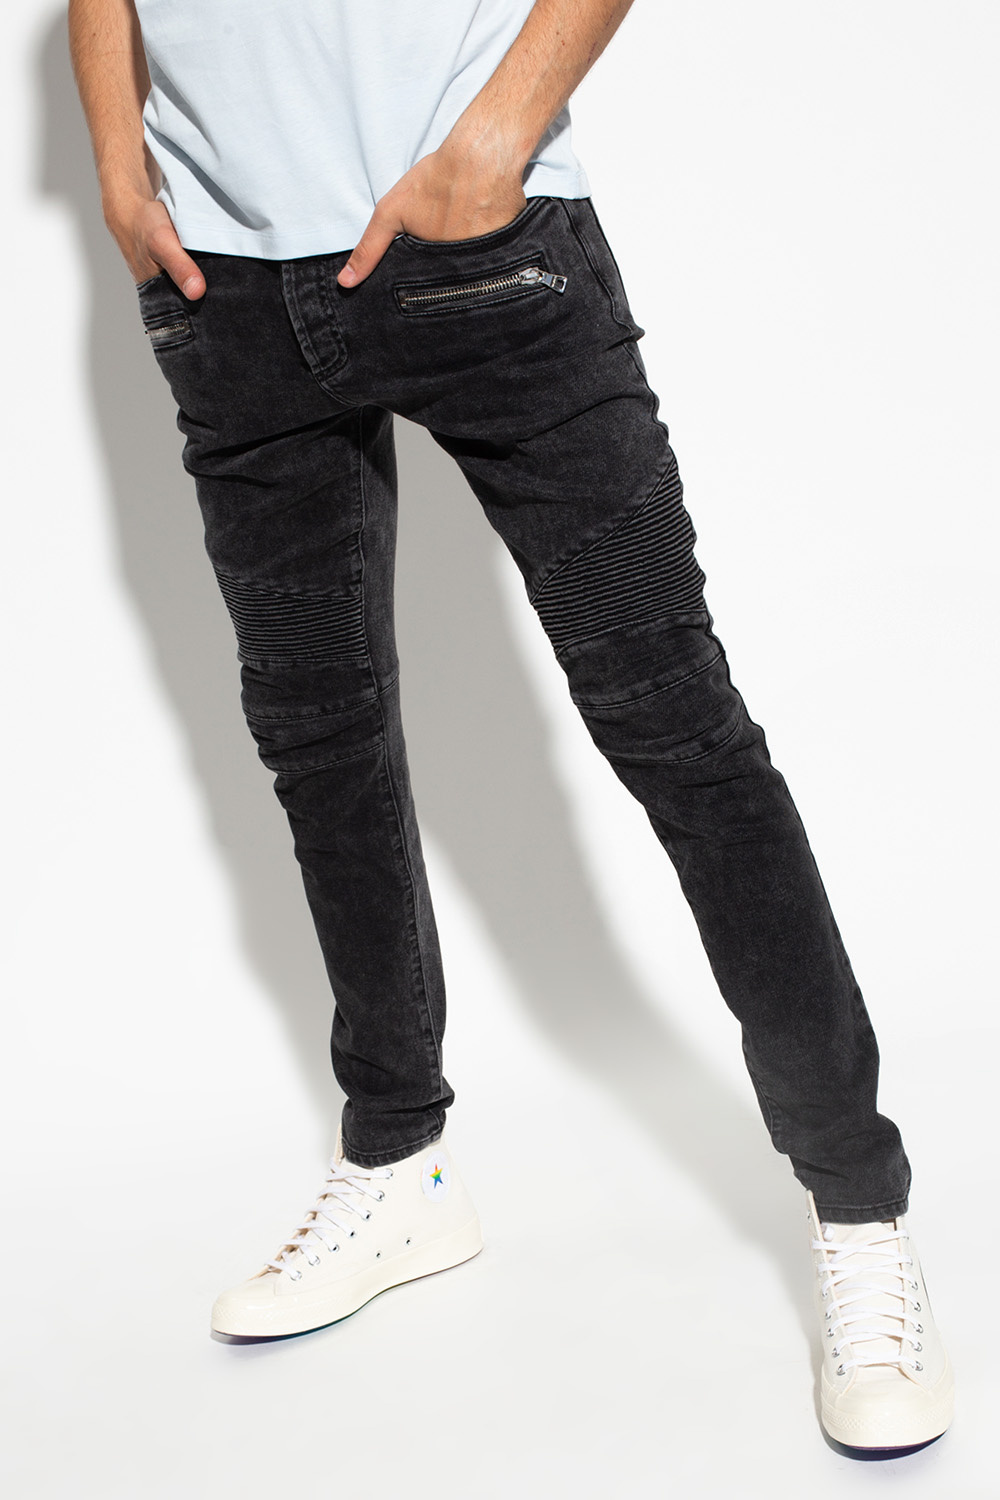 Balmain Jeans logo | Men's Clothing | StclaircomoShops | Kids